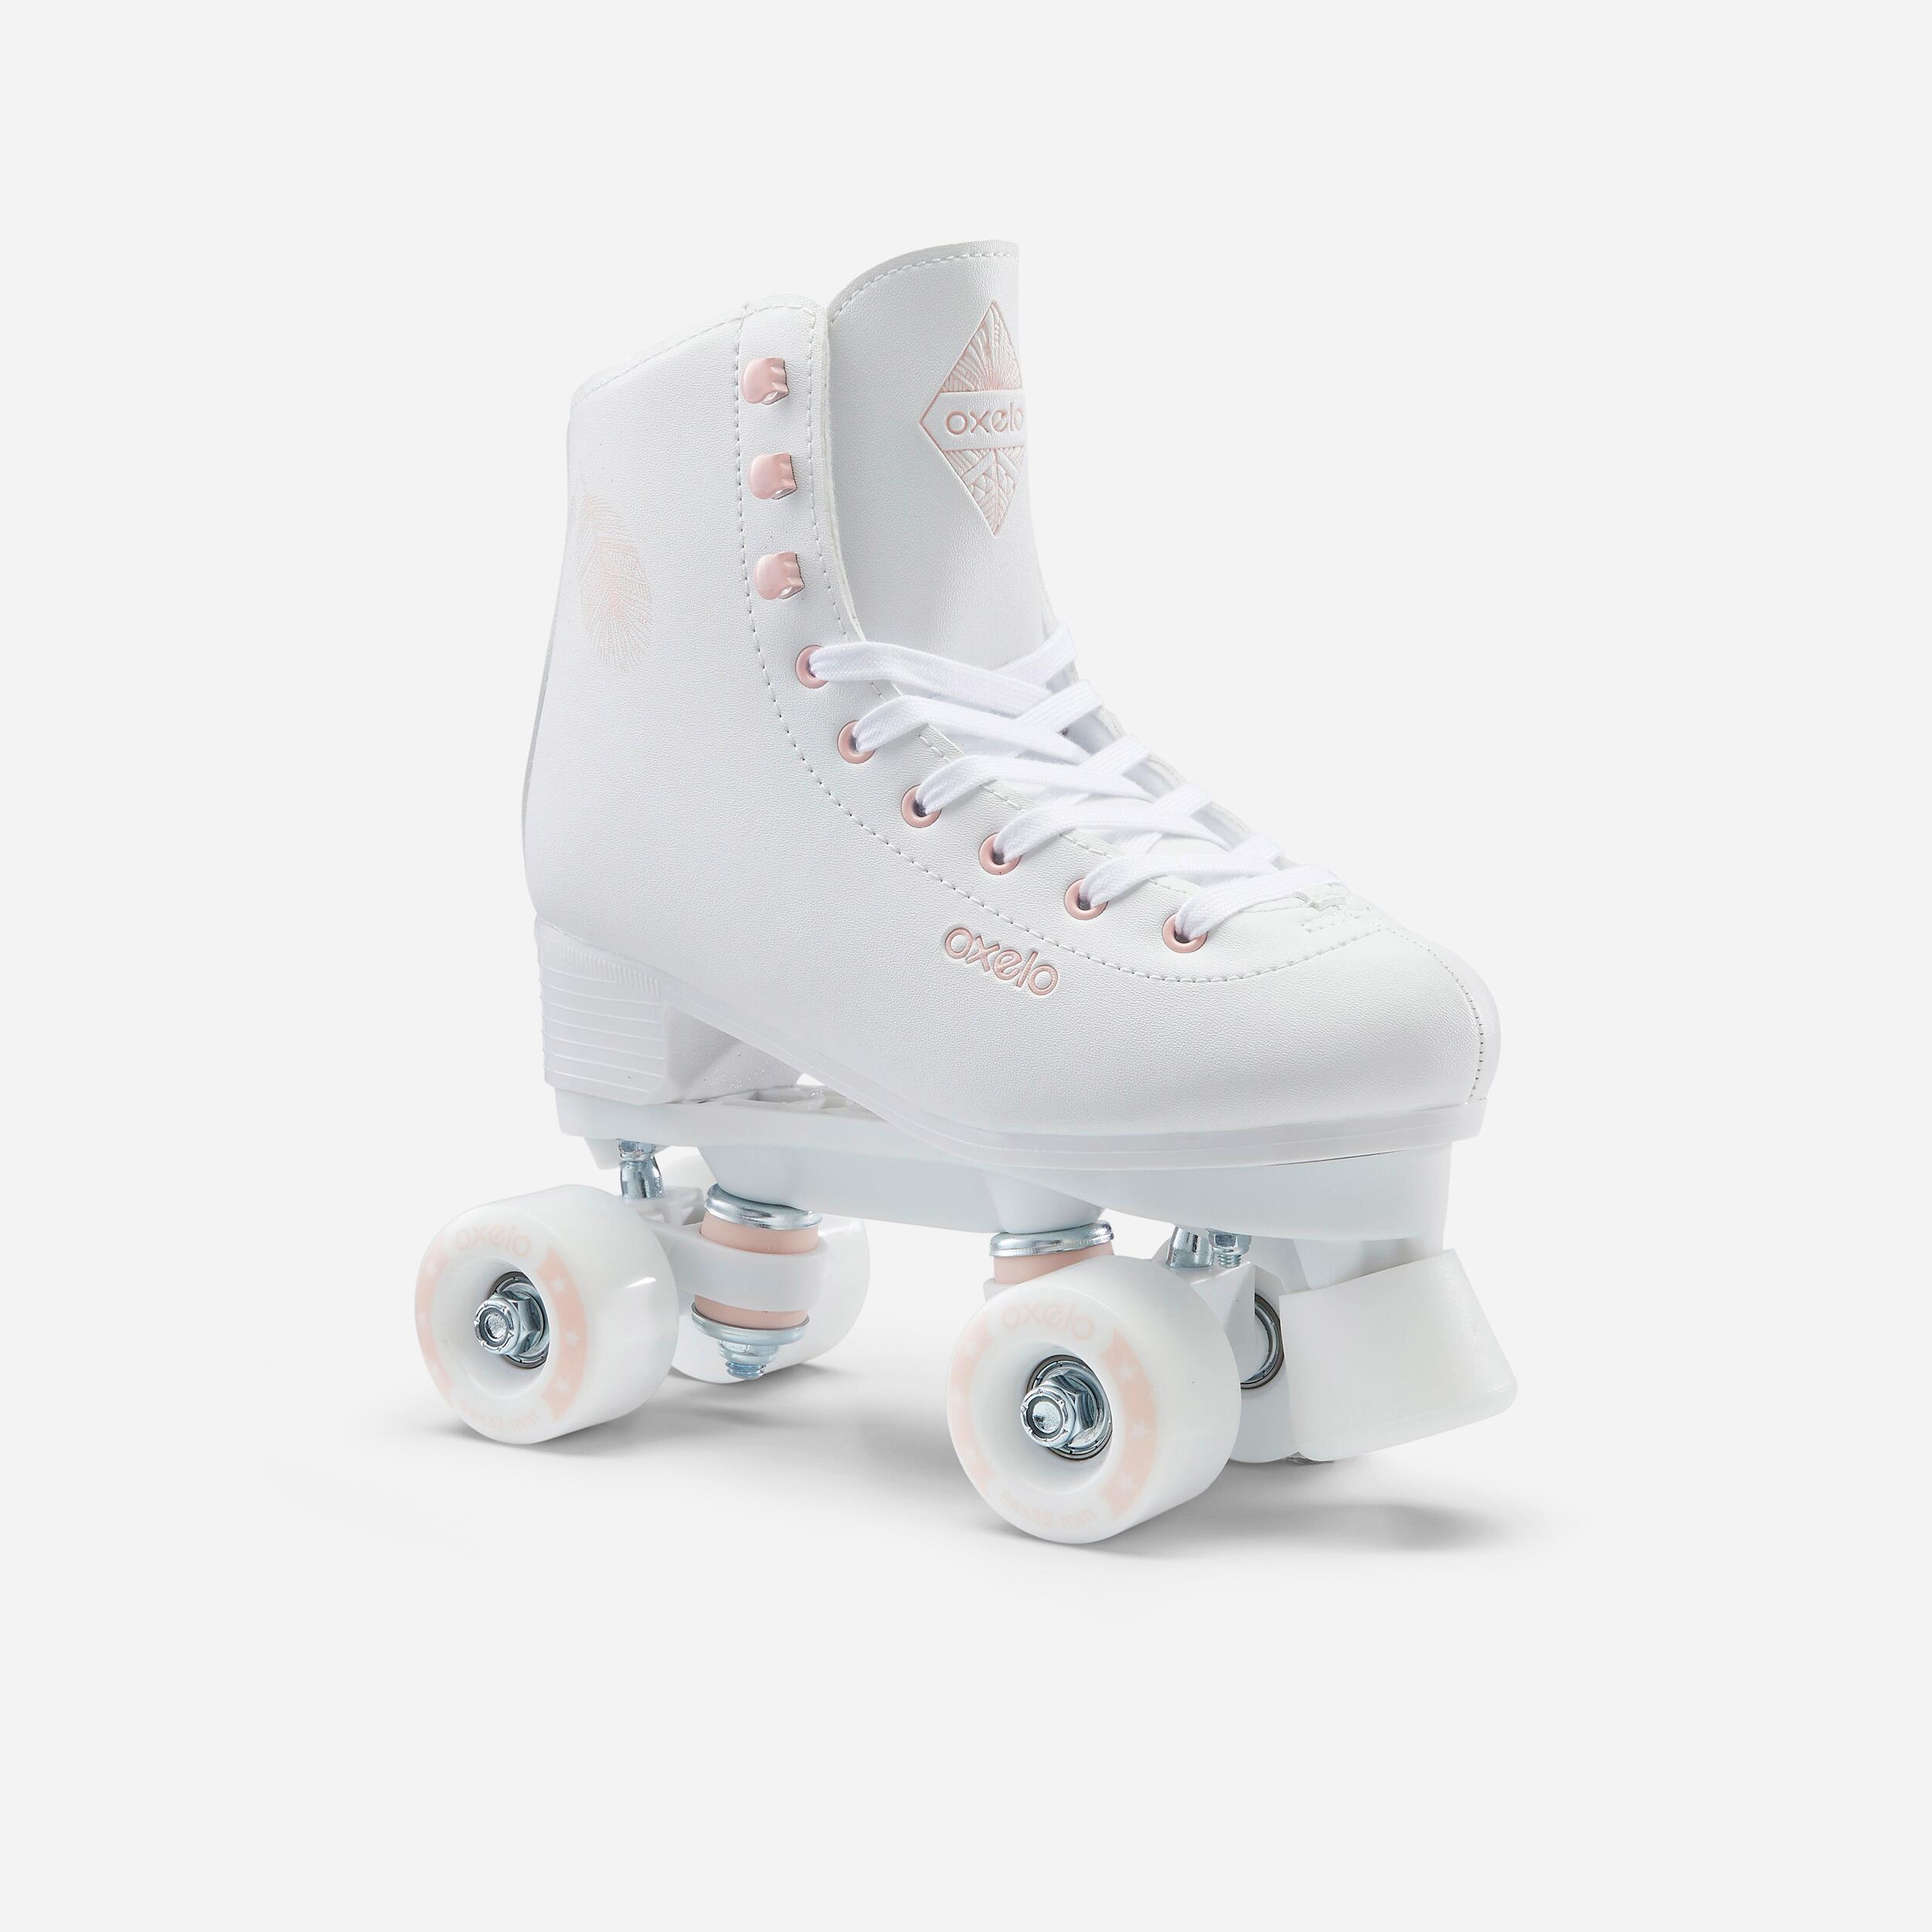 OXELO Artistic Roller Skates Quad 100 Small Size - White